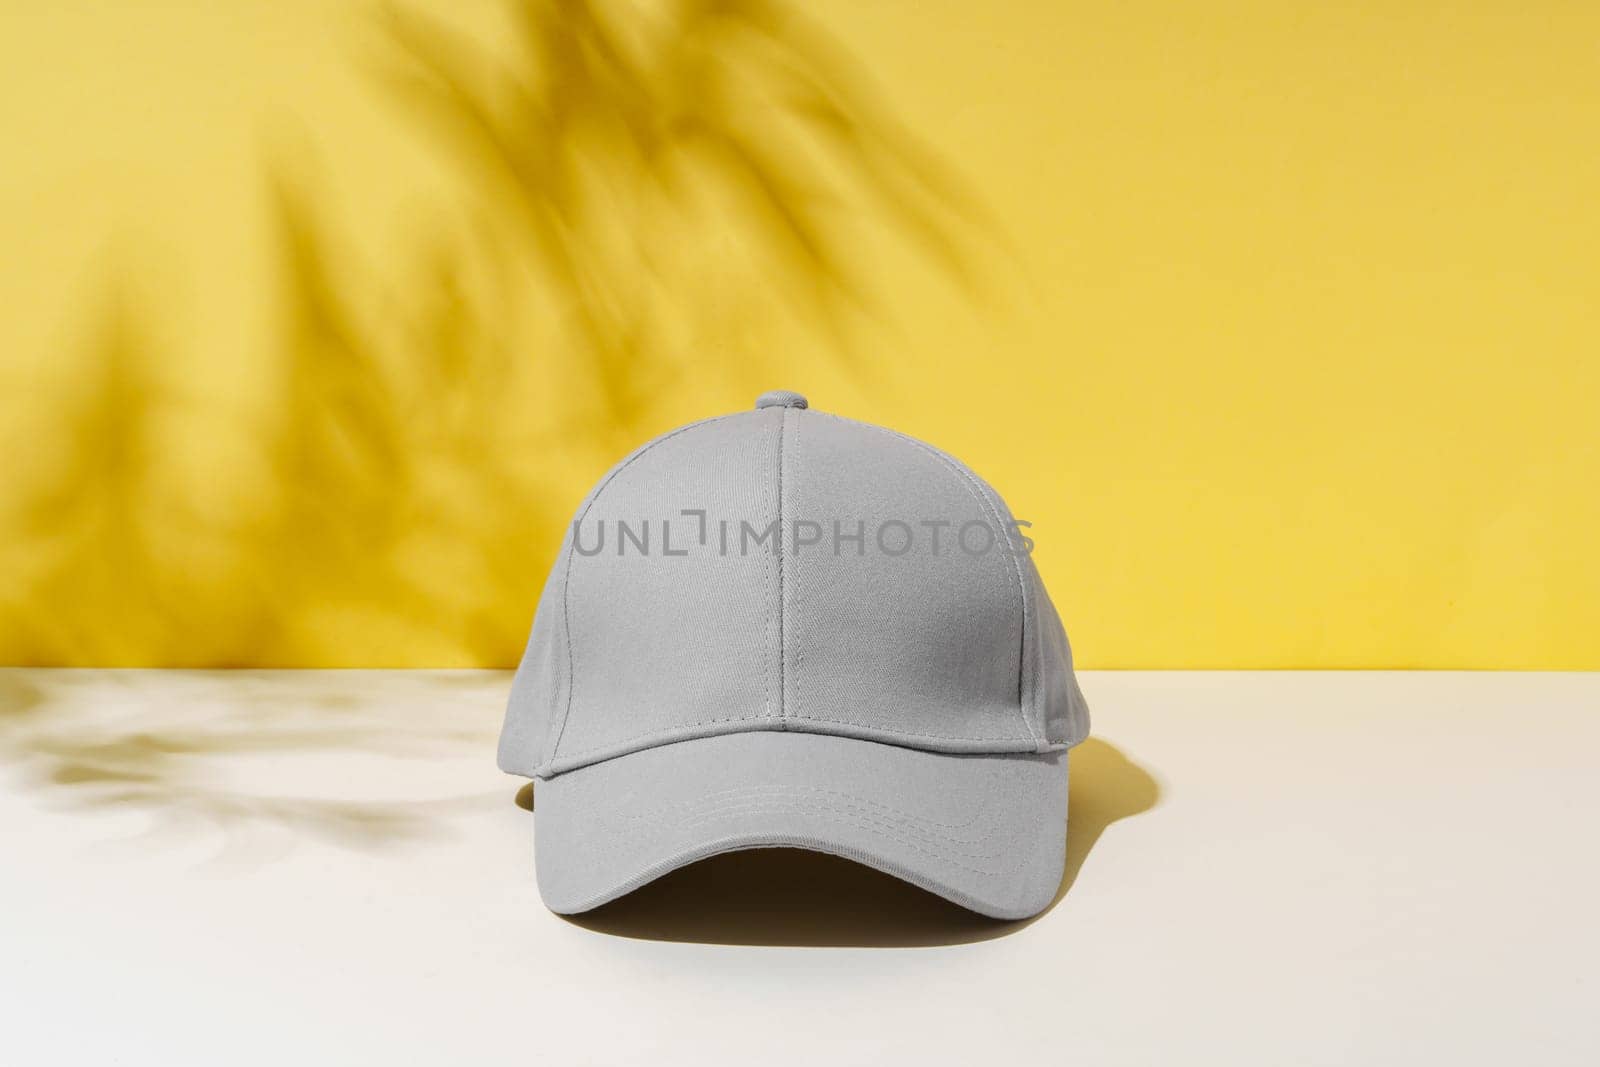 Baseball hat against yellow background in studio by Fabrikasimf